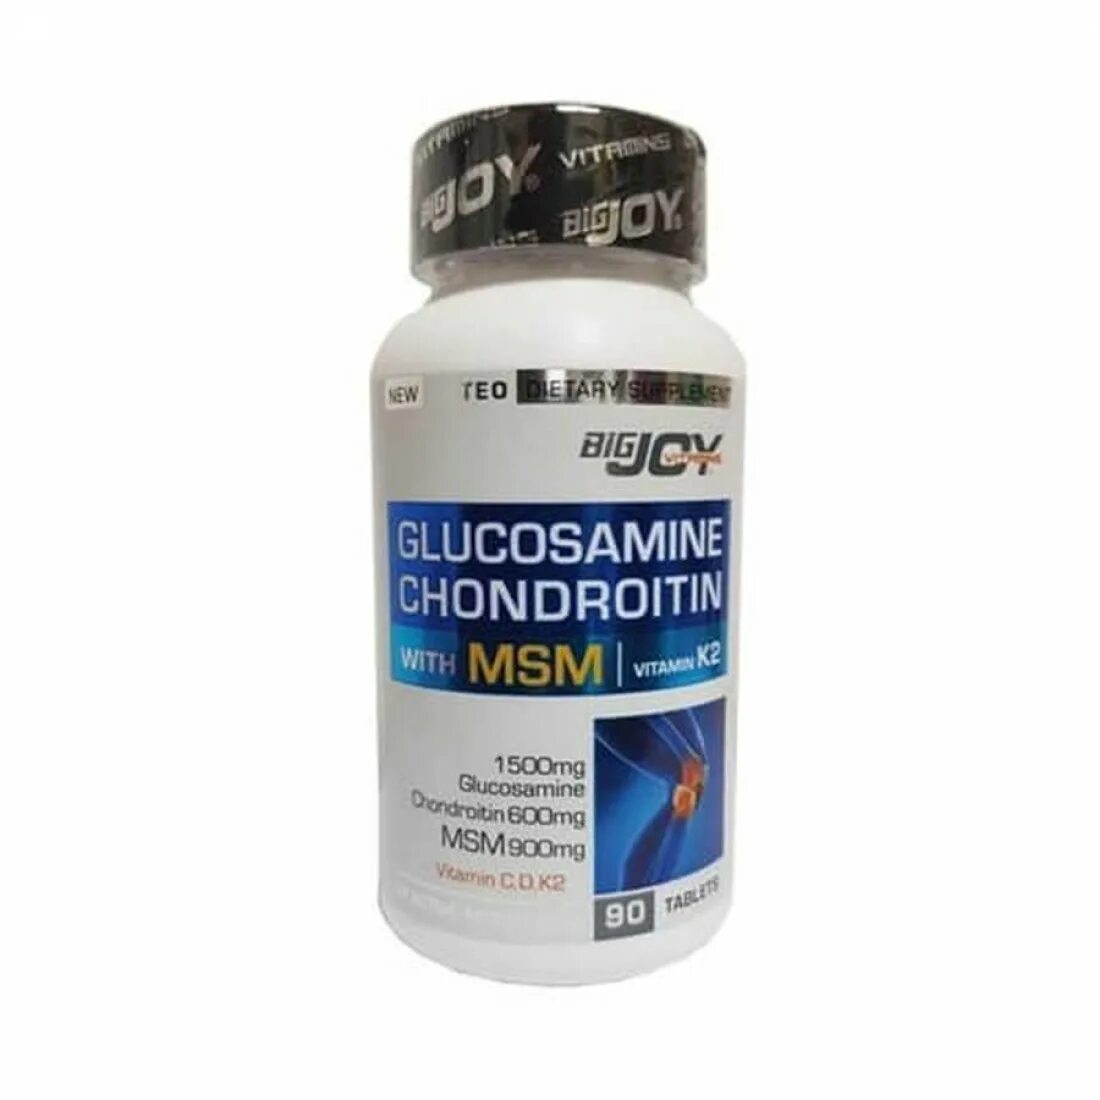 Vitamins хондроитин глюкозамин. FLEXONE with MSM / 1500mg MSM. Глюкозамин-хондроитин МСМ 900. FLEXONE with MSM /Boswellia 1500mg MSM 900mg. DNZ Glucosamine Chondroitin MSM 90 Tablet.